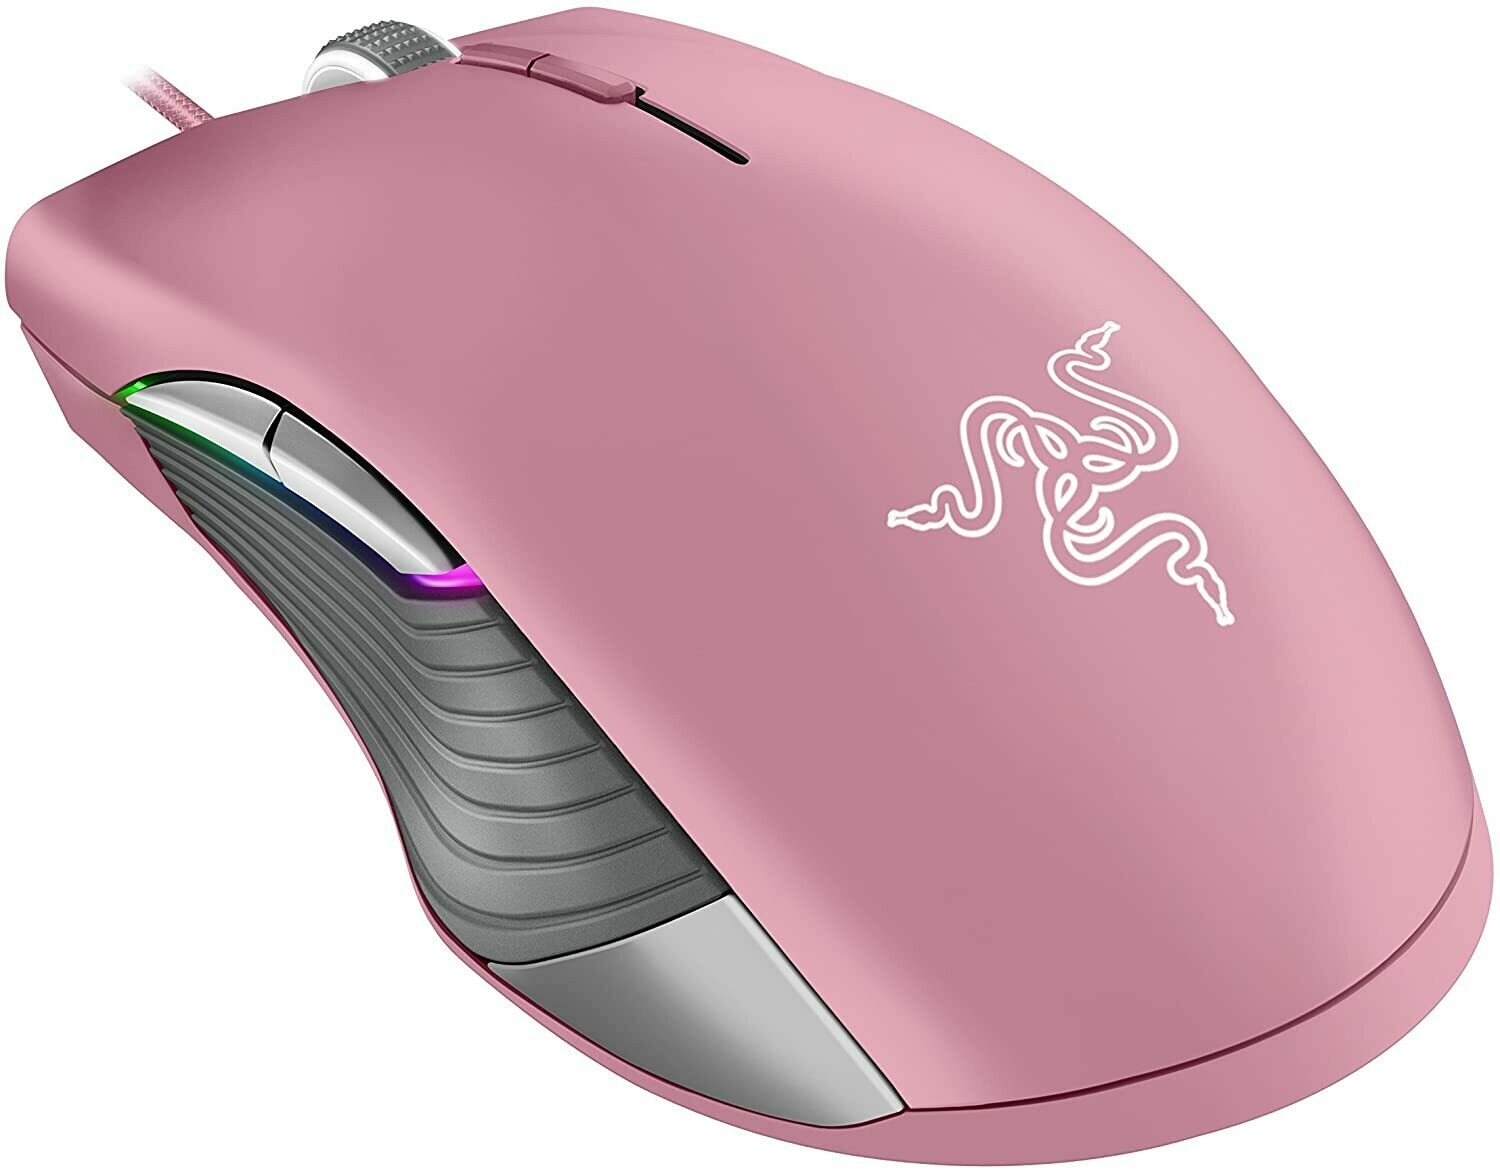 Razer Lancehead TE Ambidextrous Gaming Mouse: 16,000 DPI Optical Sensor - Chroma RGB Lighting - 8 Programmable Buttons - Mechanical Switches - Quartz Pink